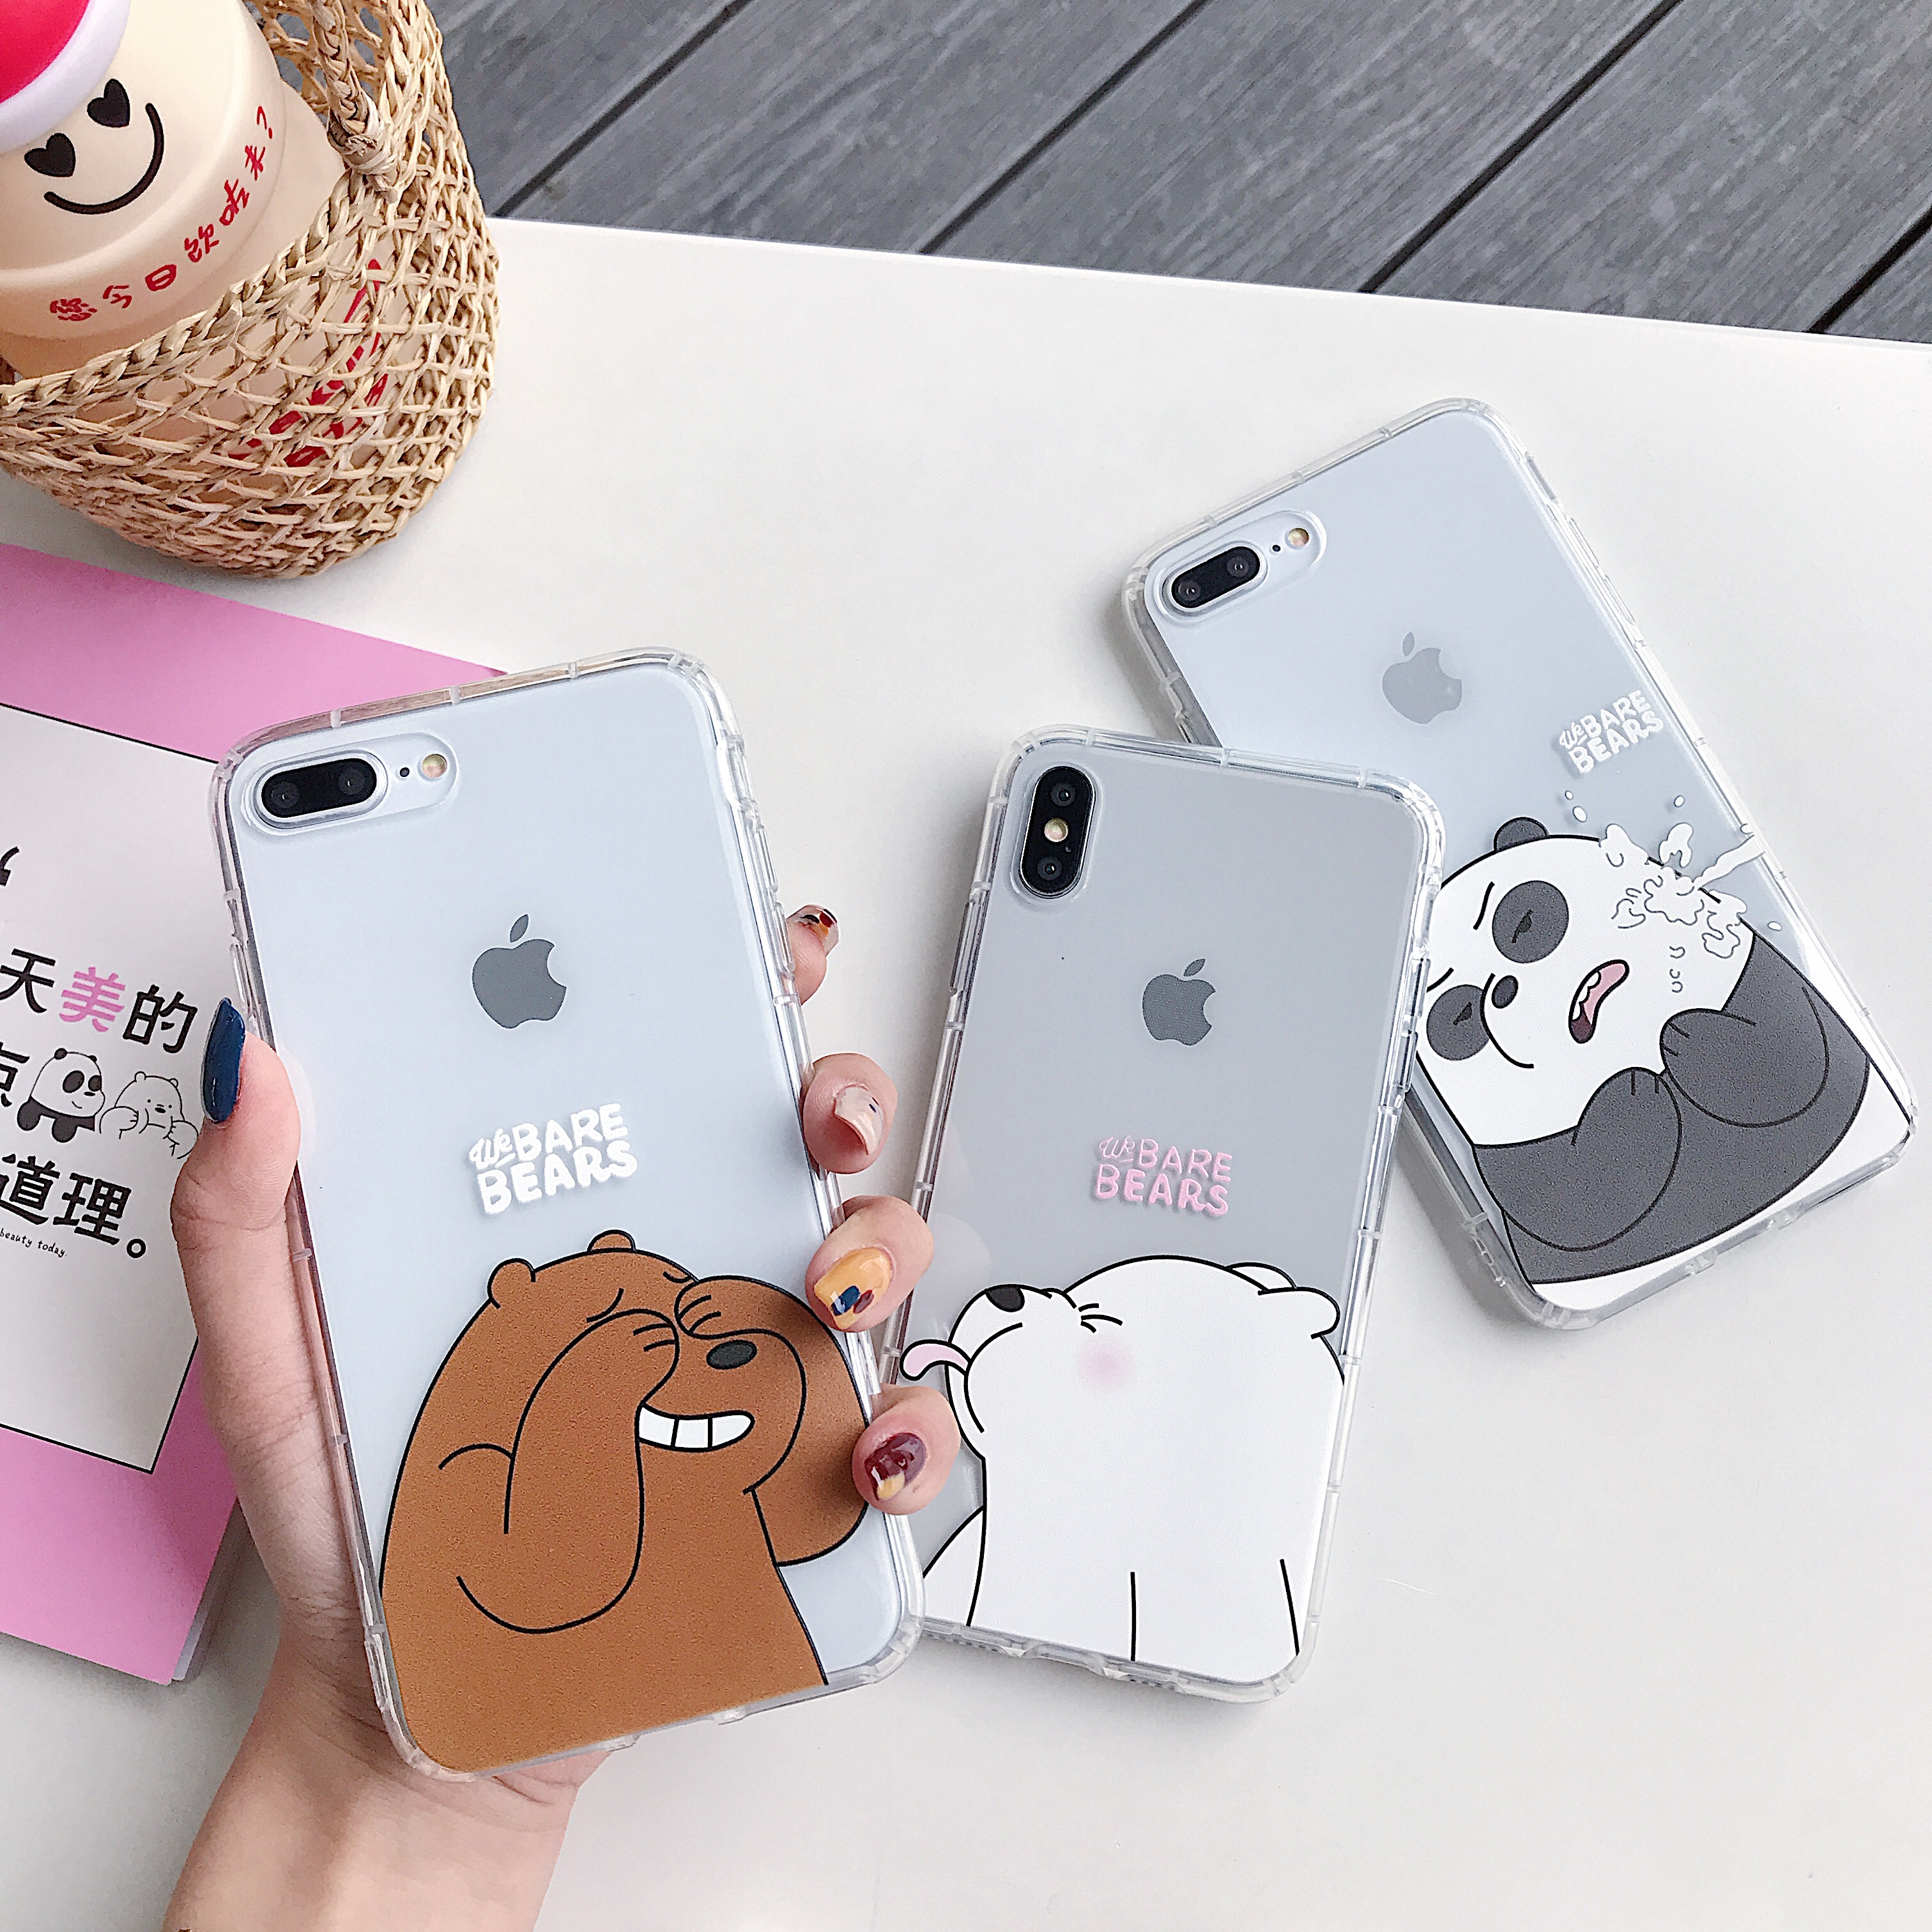 We Bare Bears iPhone Case